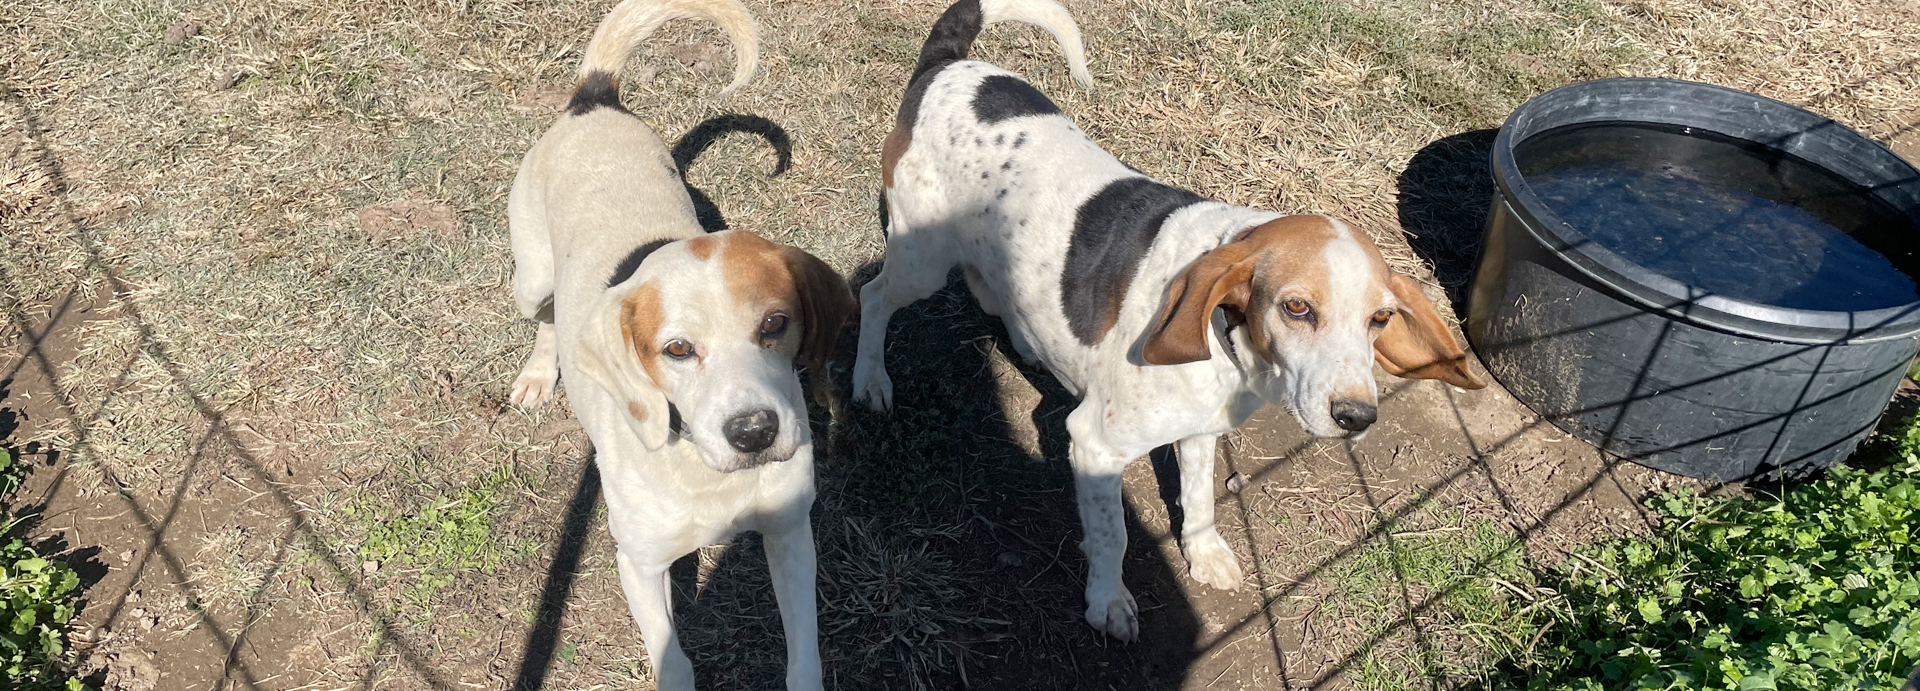 Beagle Freedom Project receives $25,000 grant for Oklahoma animal rehab efforts